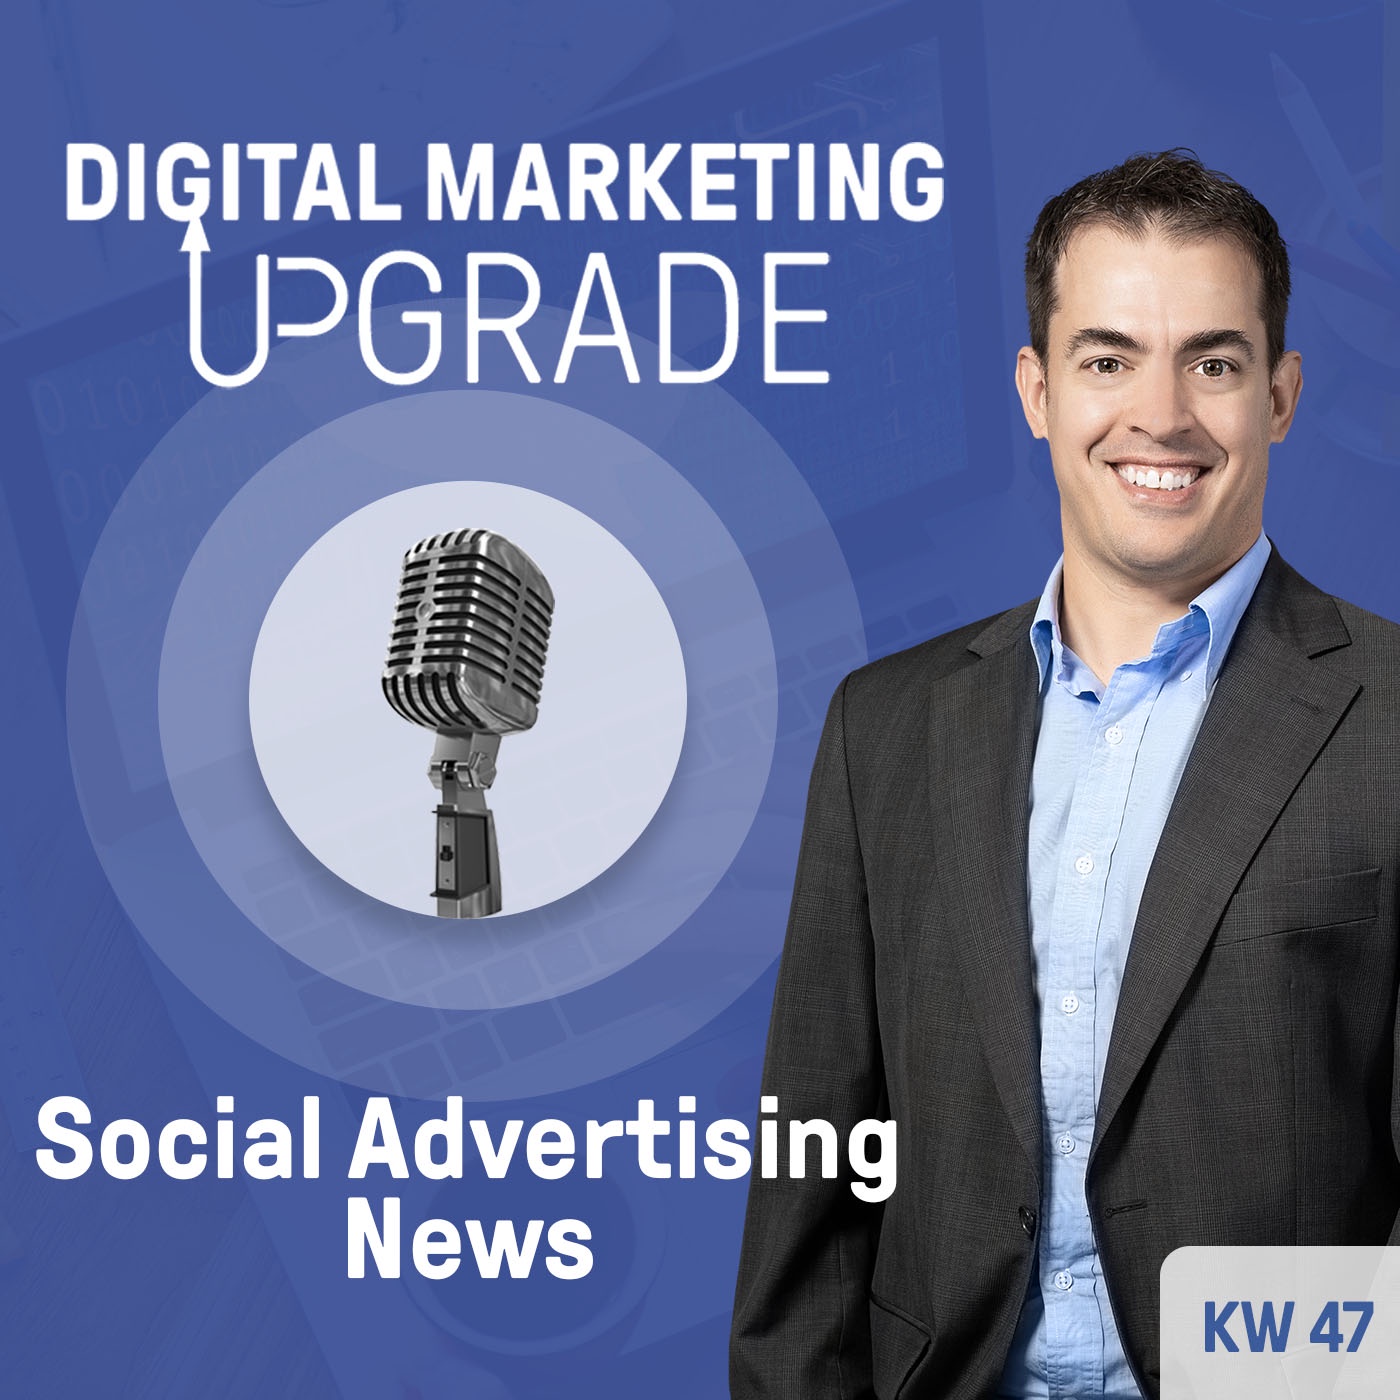 Social Advertising News - KW 47/22